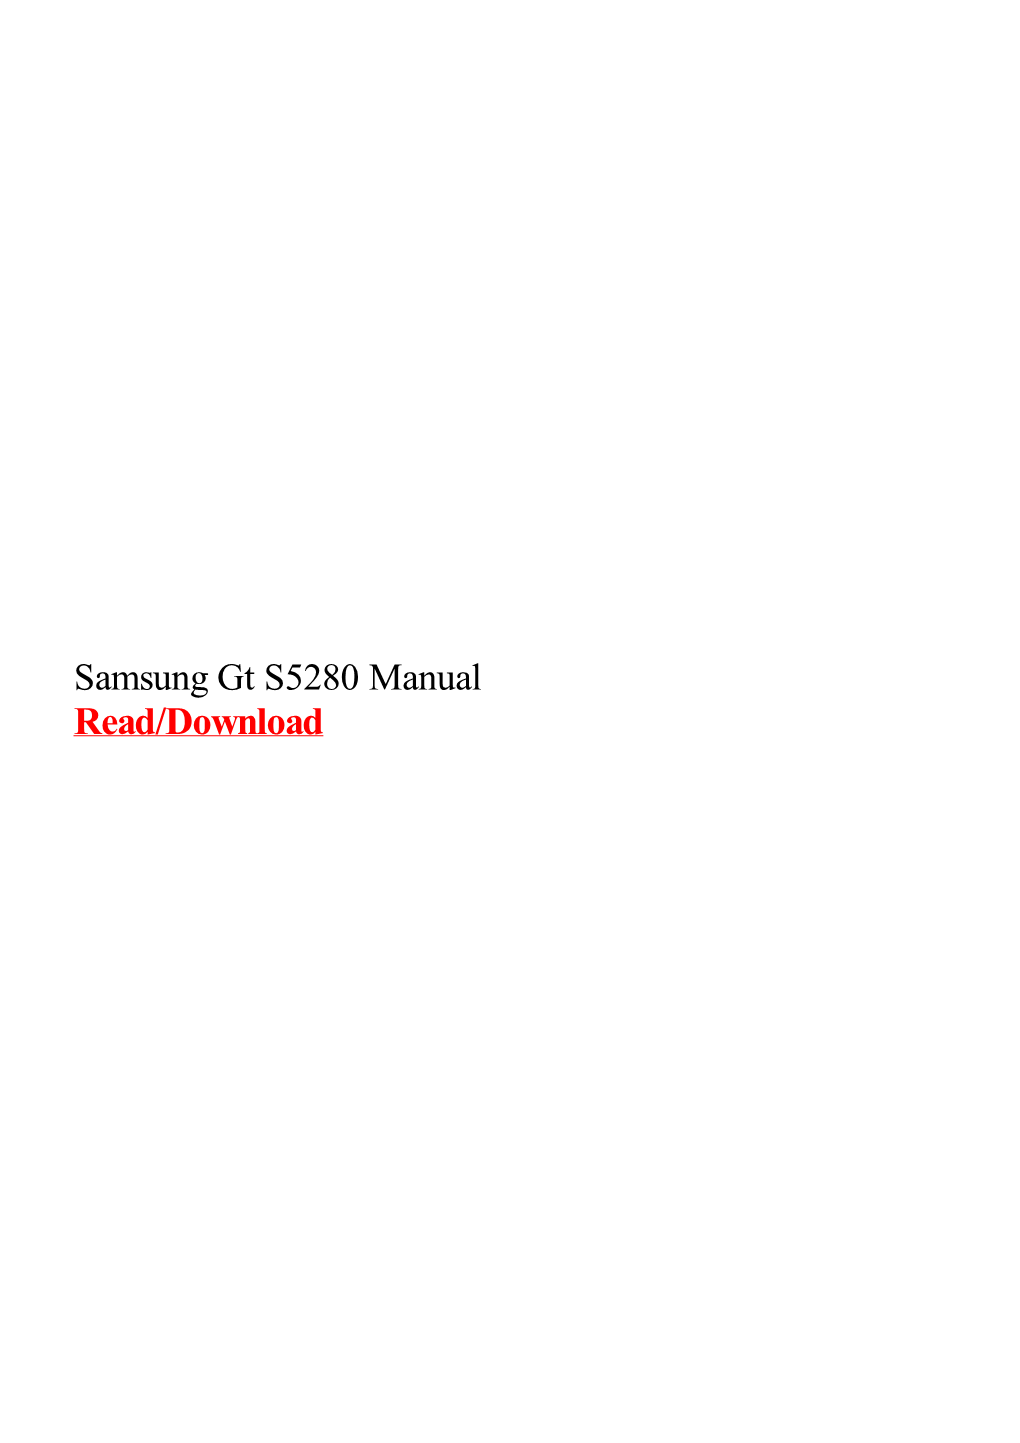 Samsung Gt S5280 Manual.Pdf